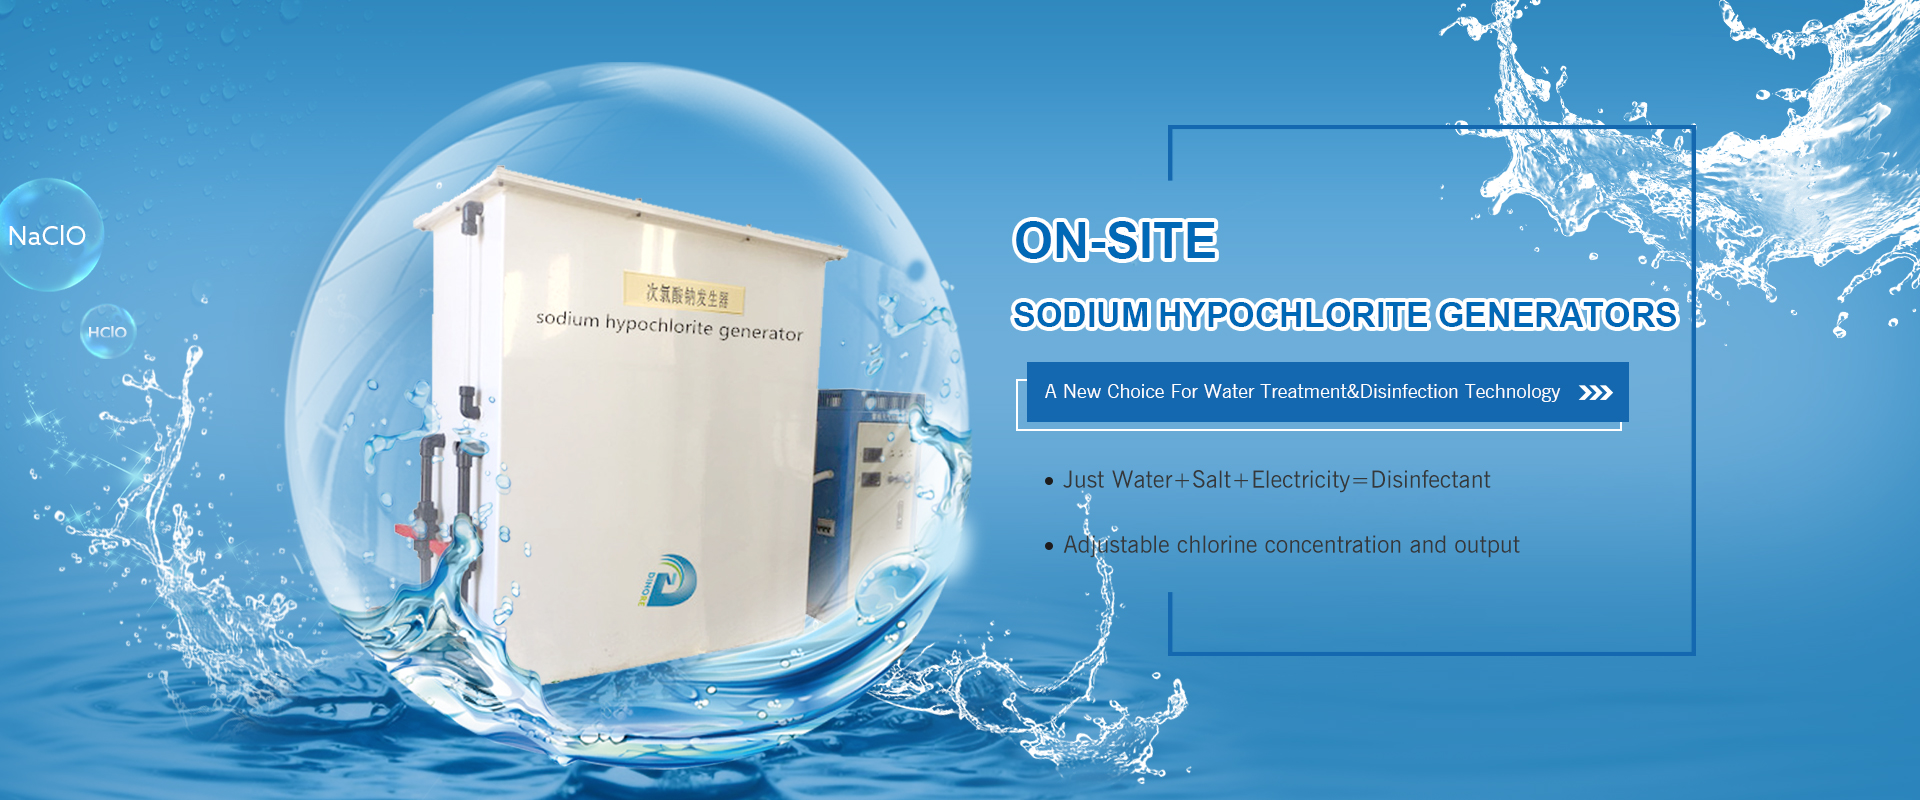 On-site Sodium Hypochlorite Generators